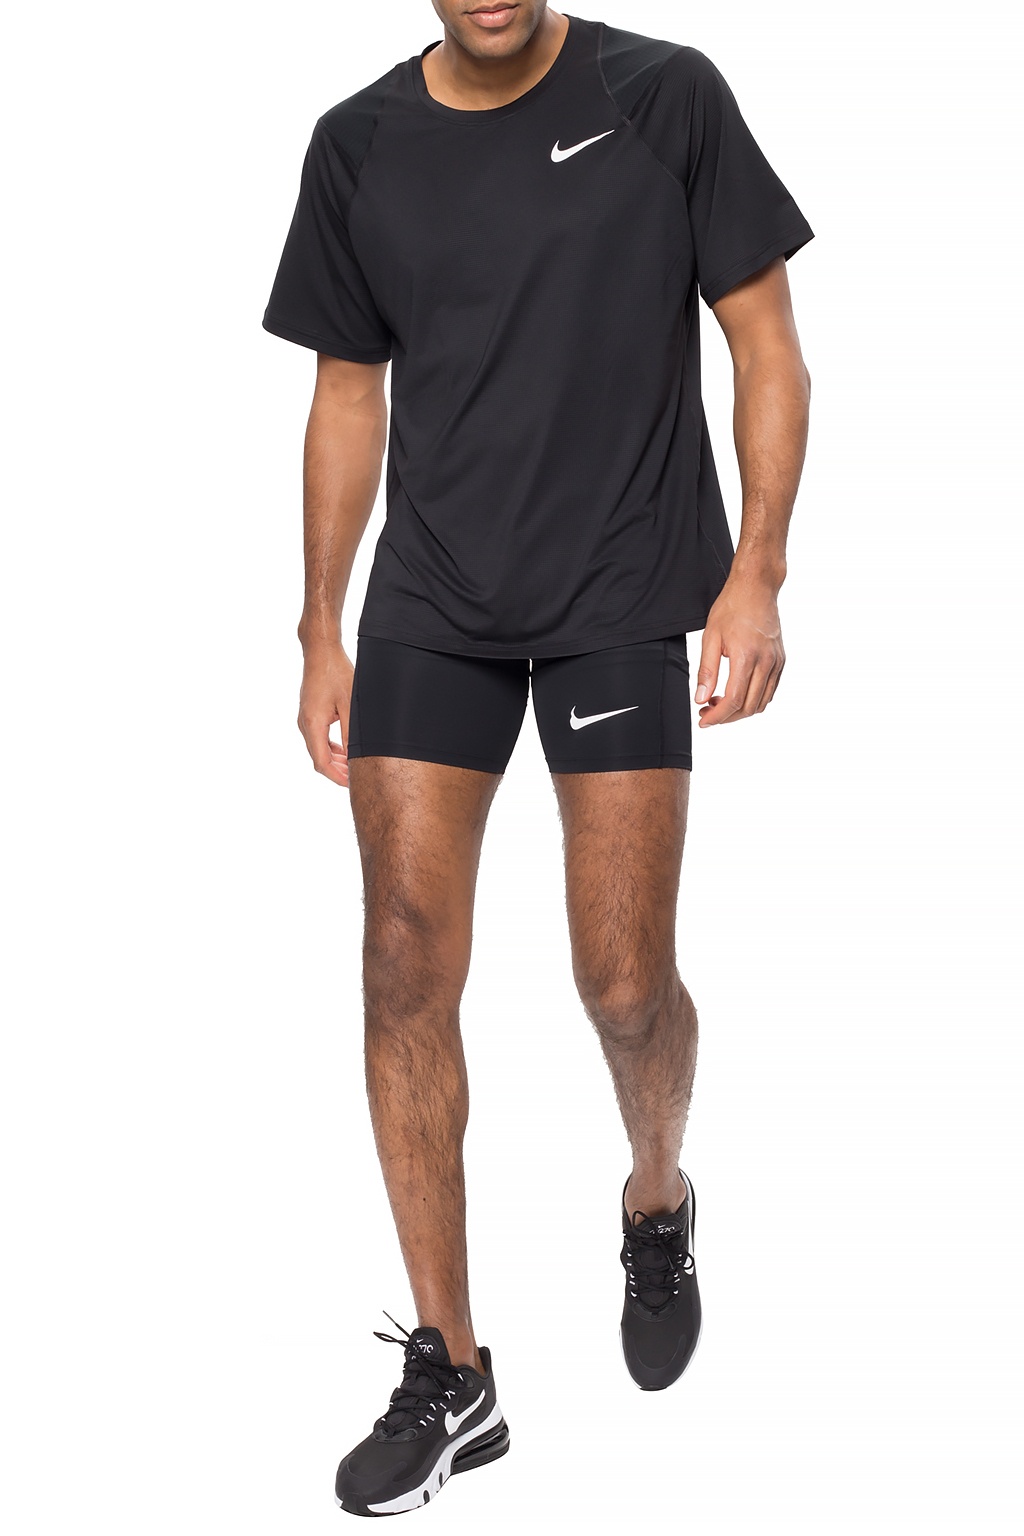 Black Short training leggings Nike - Vitkac Canada